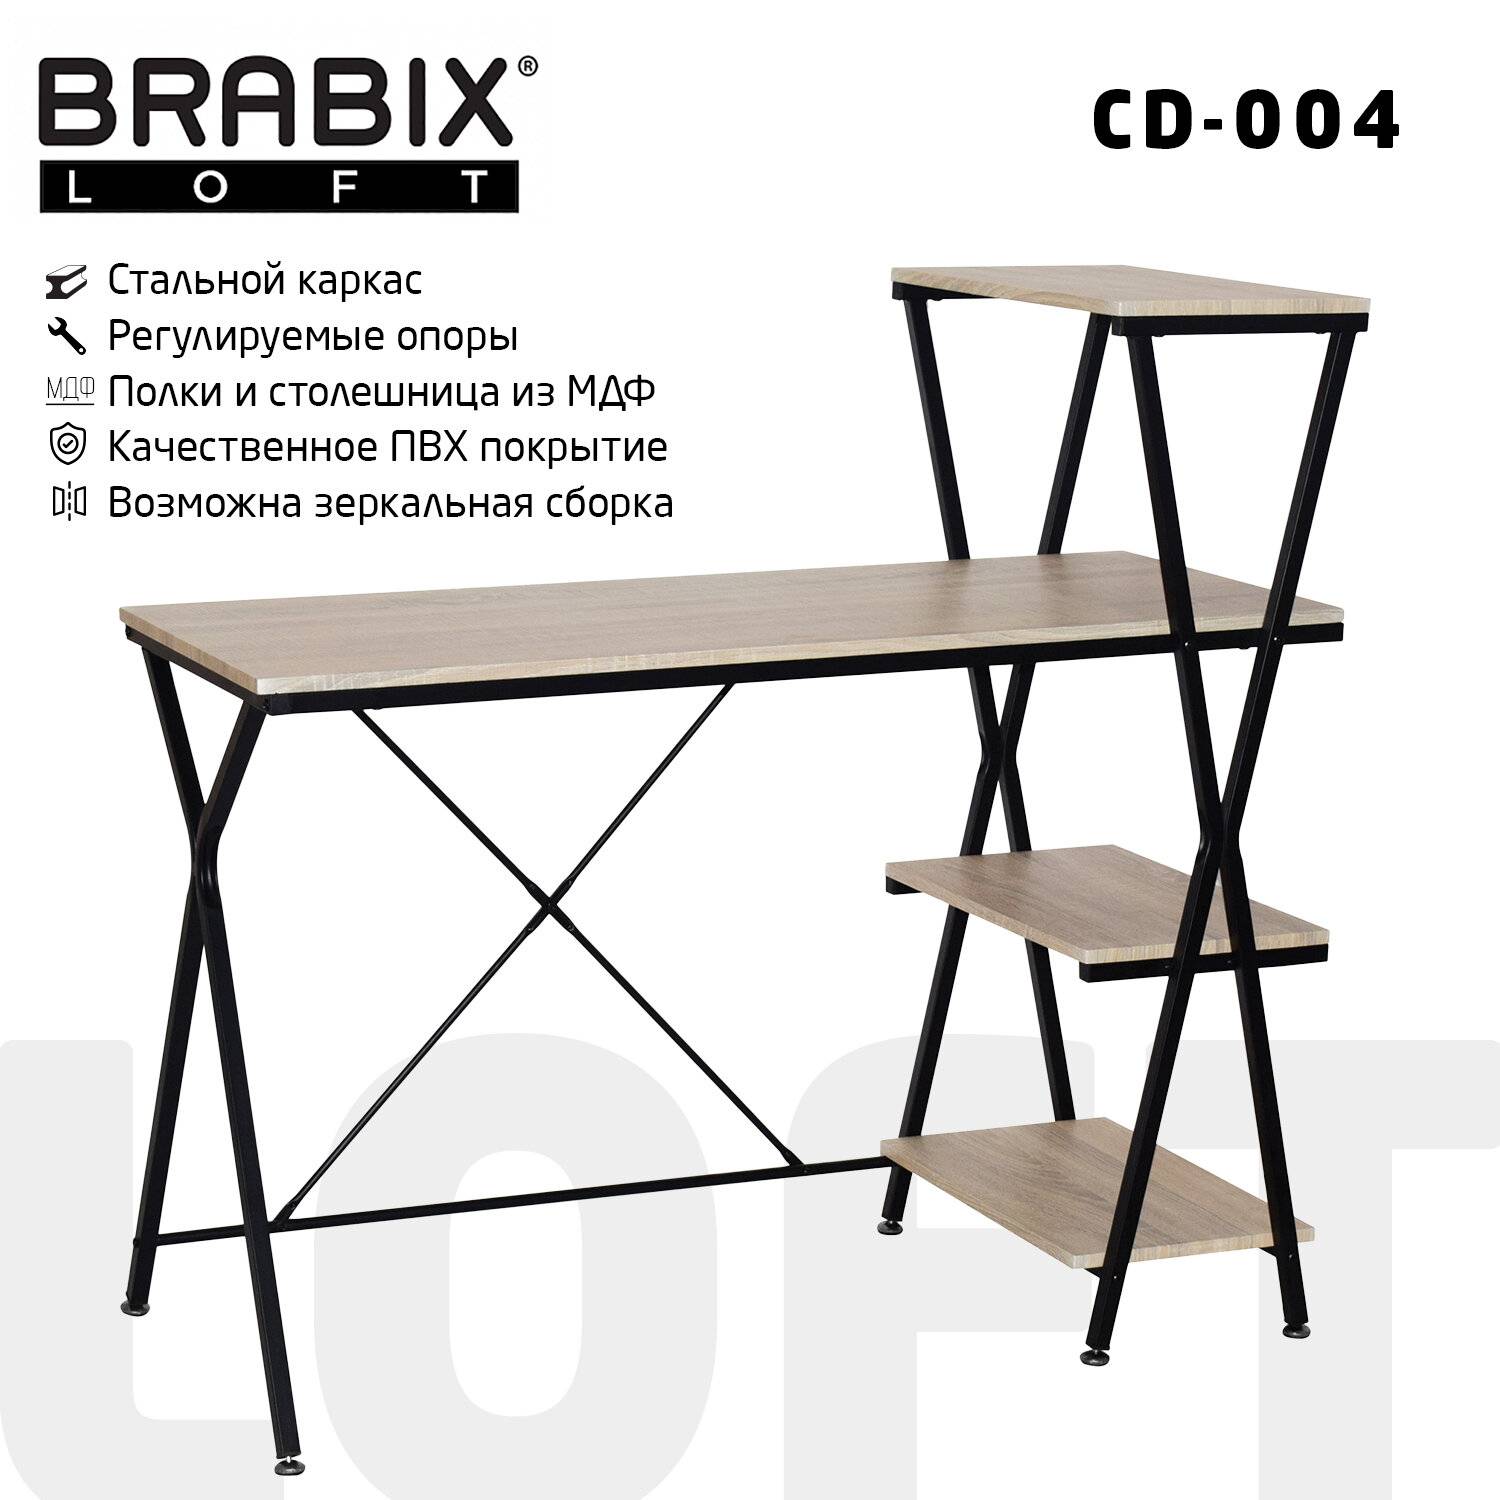 Стол на металлокаркасе Brabix Loft CD-004